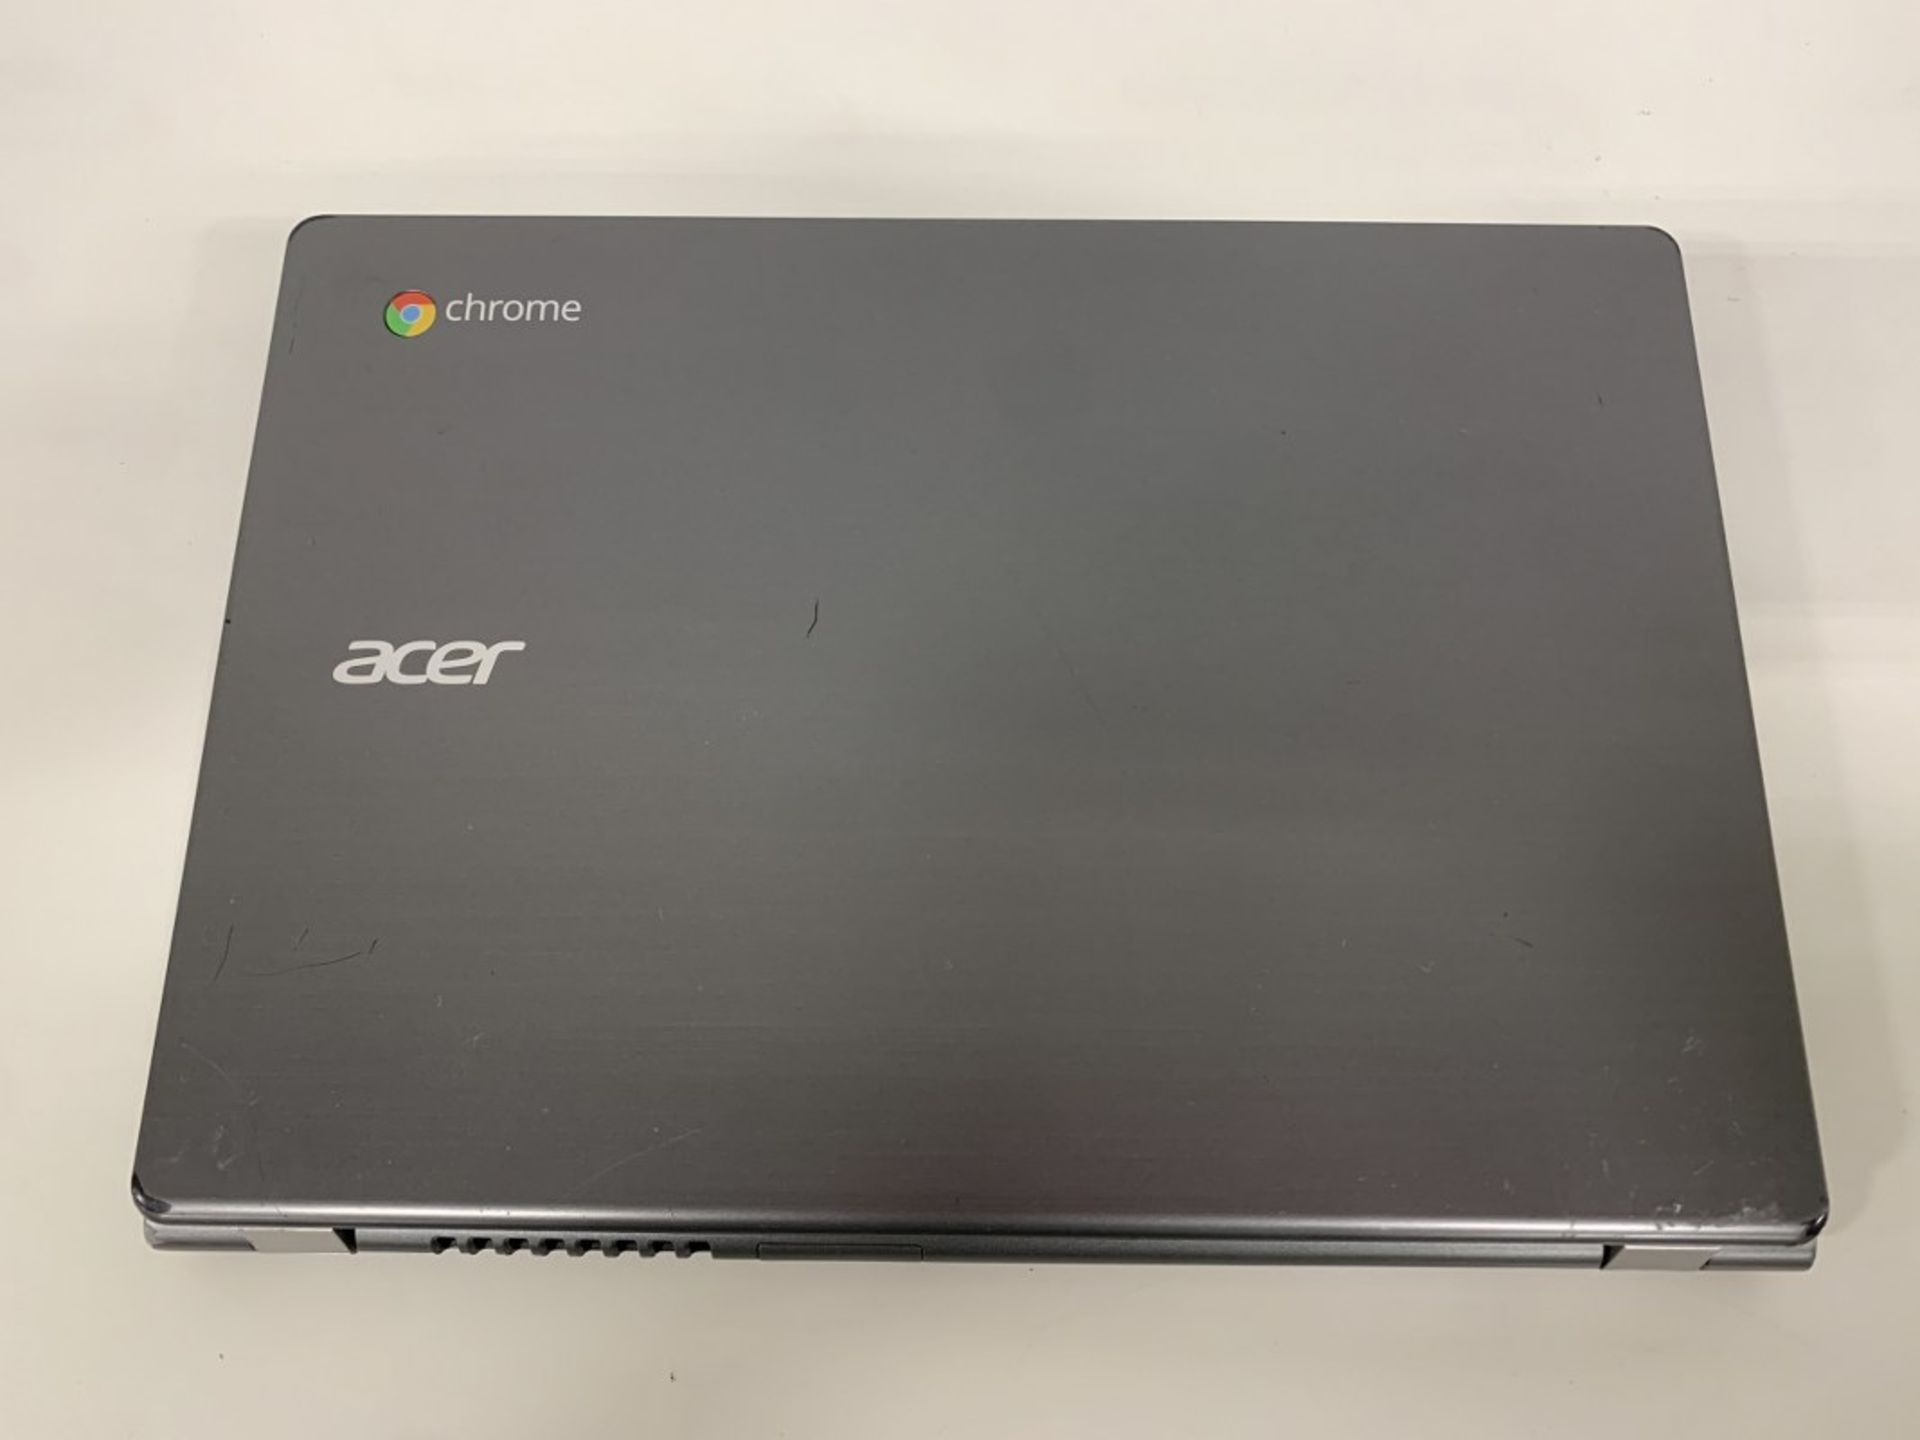 Acer - Chromebook 11 C740-C4PE (11.6-inch HD, 4 GB, 16GB SSD) - Image 3 of 3